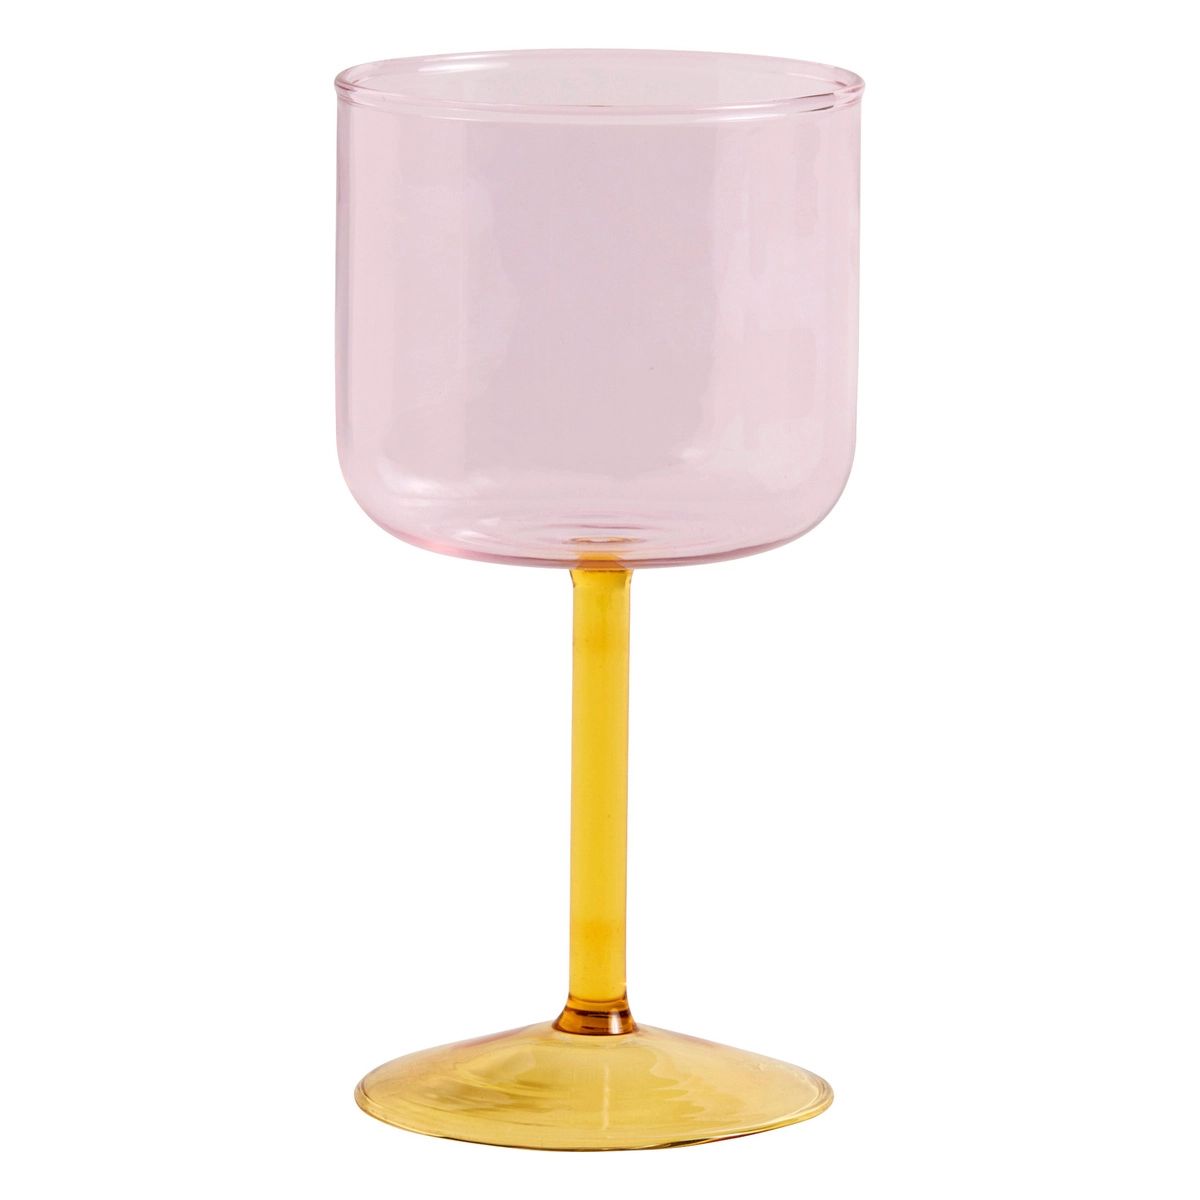 HAY Tint wineglass, 2 pcs, pink - yellow | Finnish Design Shop (FI)